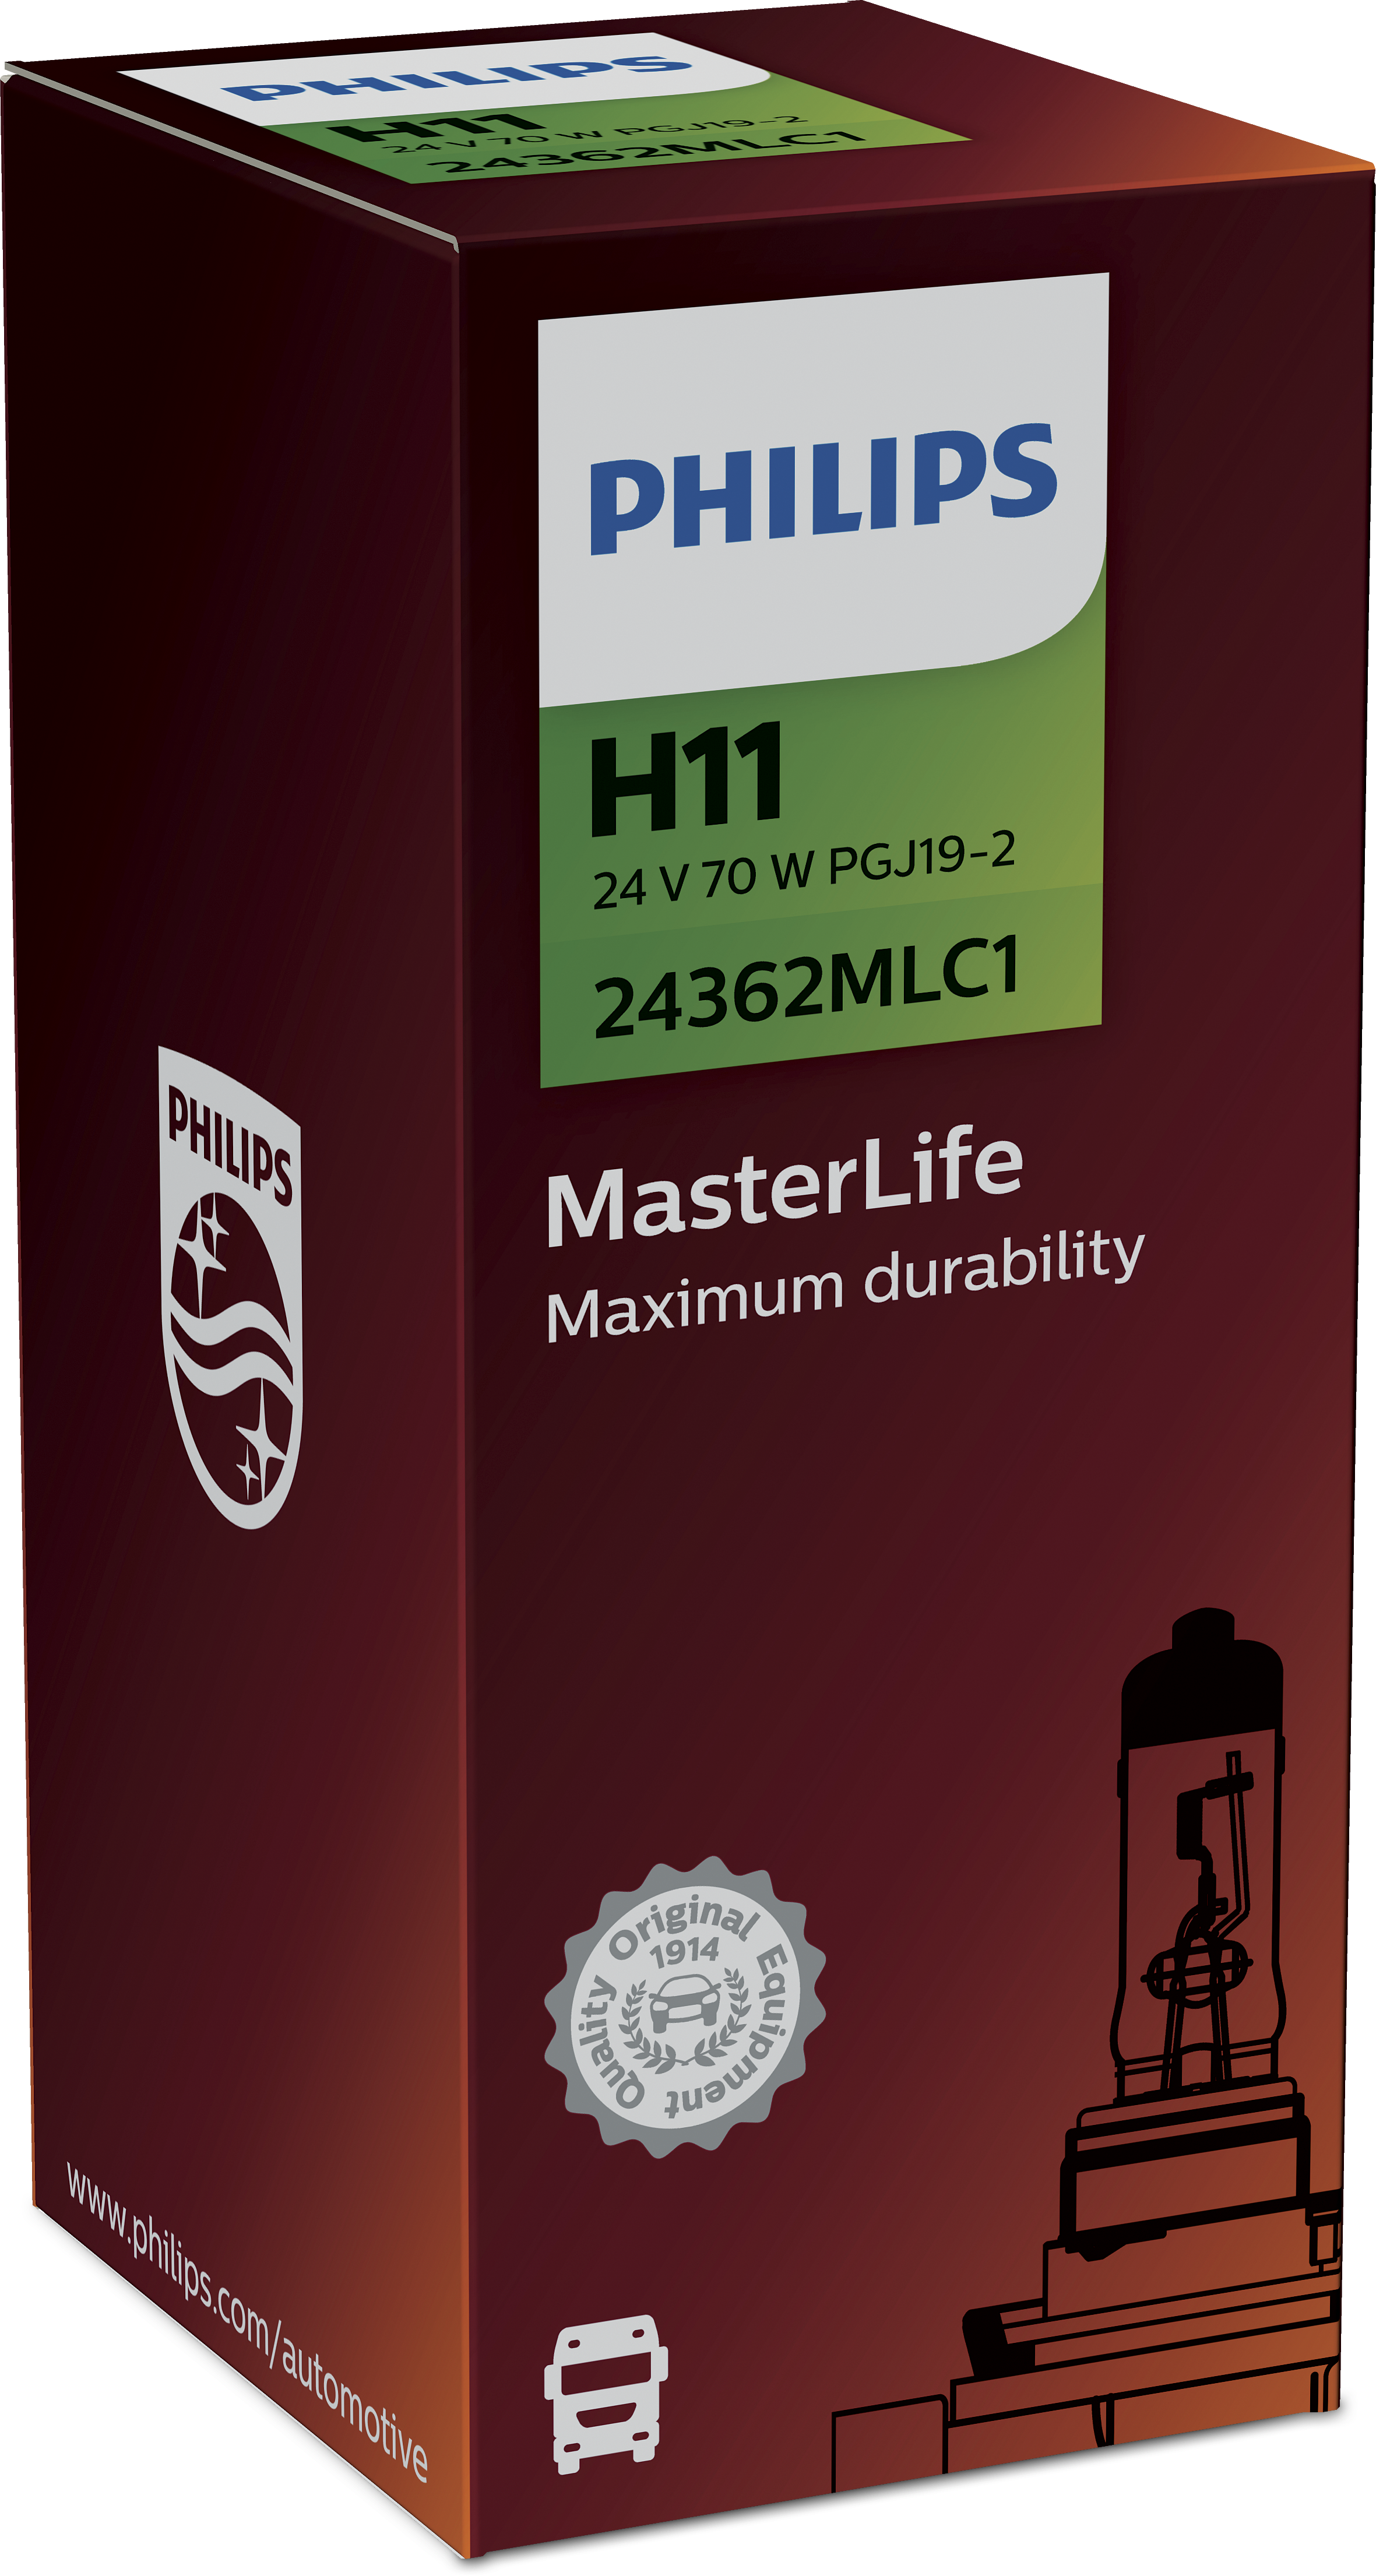 Лампа накаливания H11 MasterLife 24V 70W pgj19-2 С1 Philips                24362MLC1